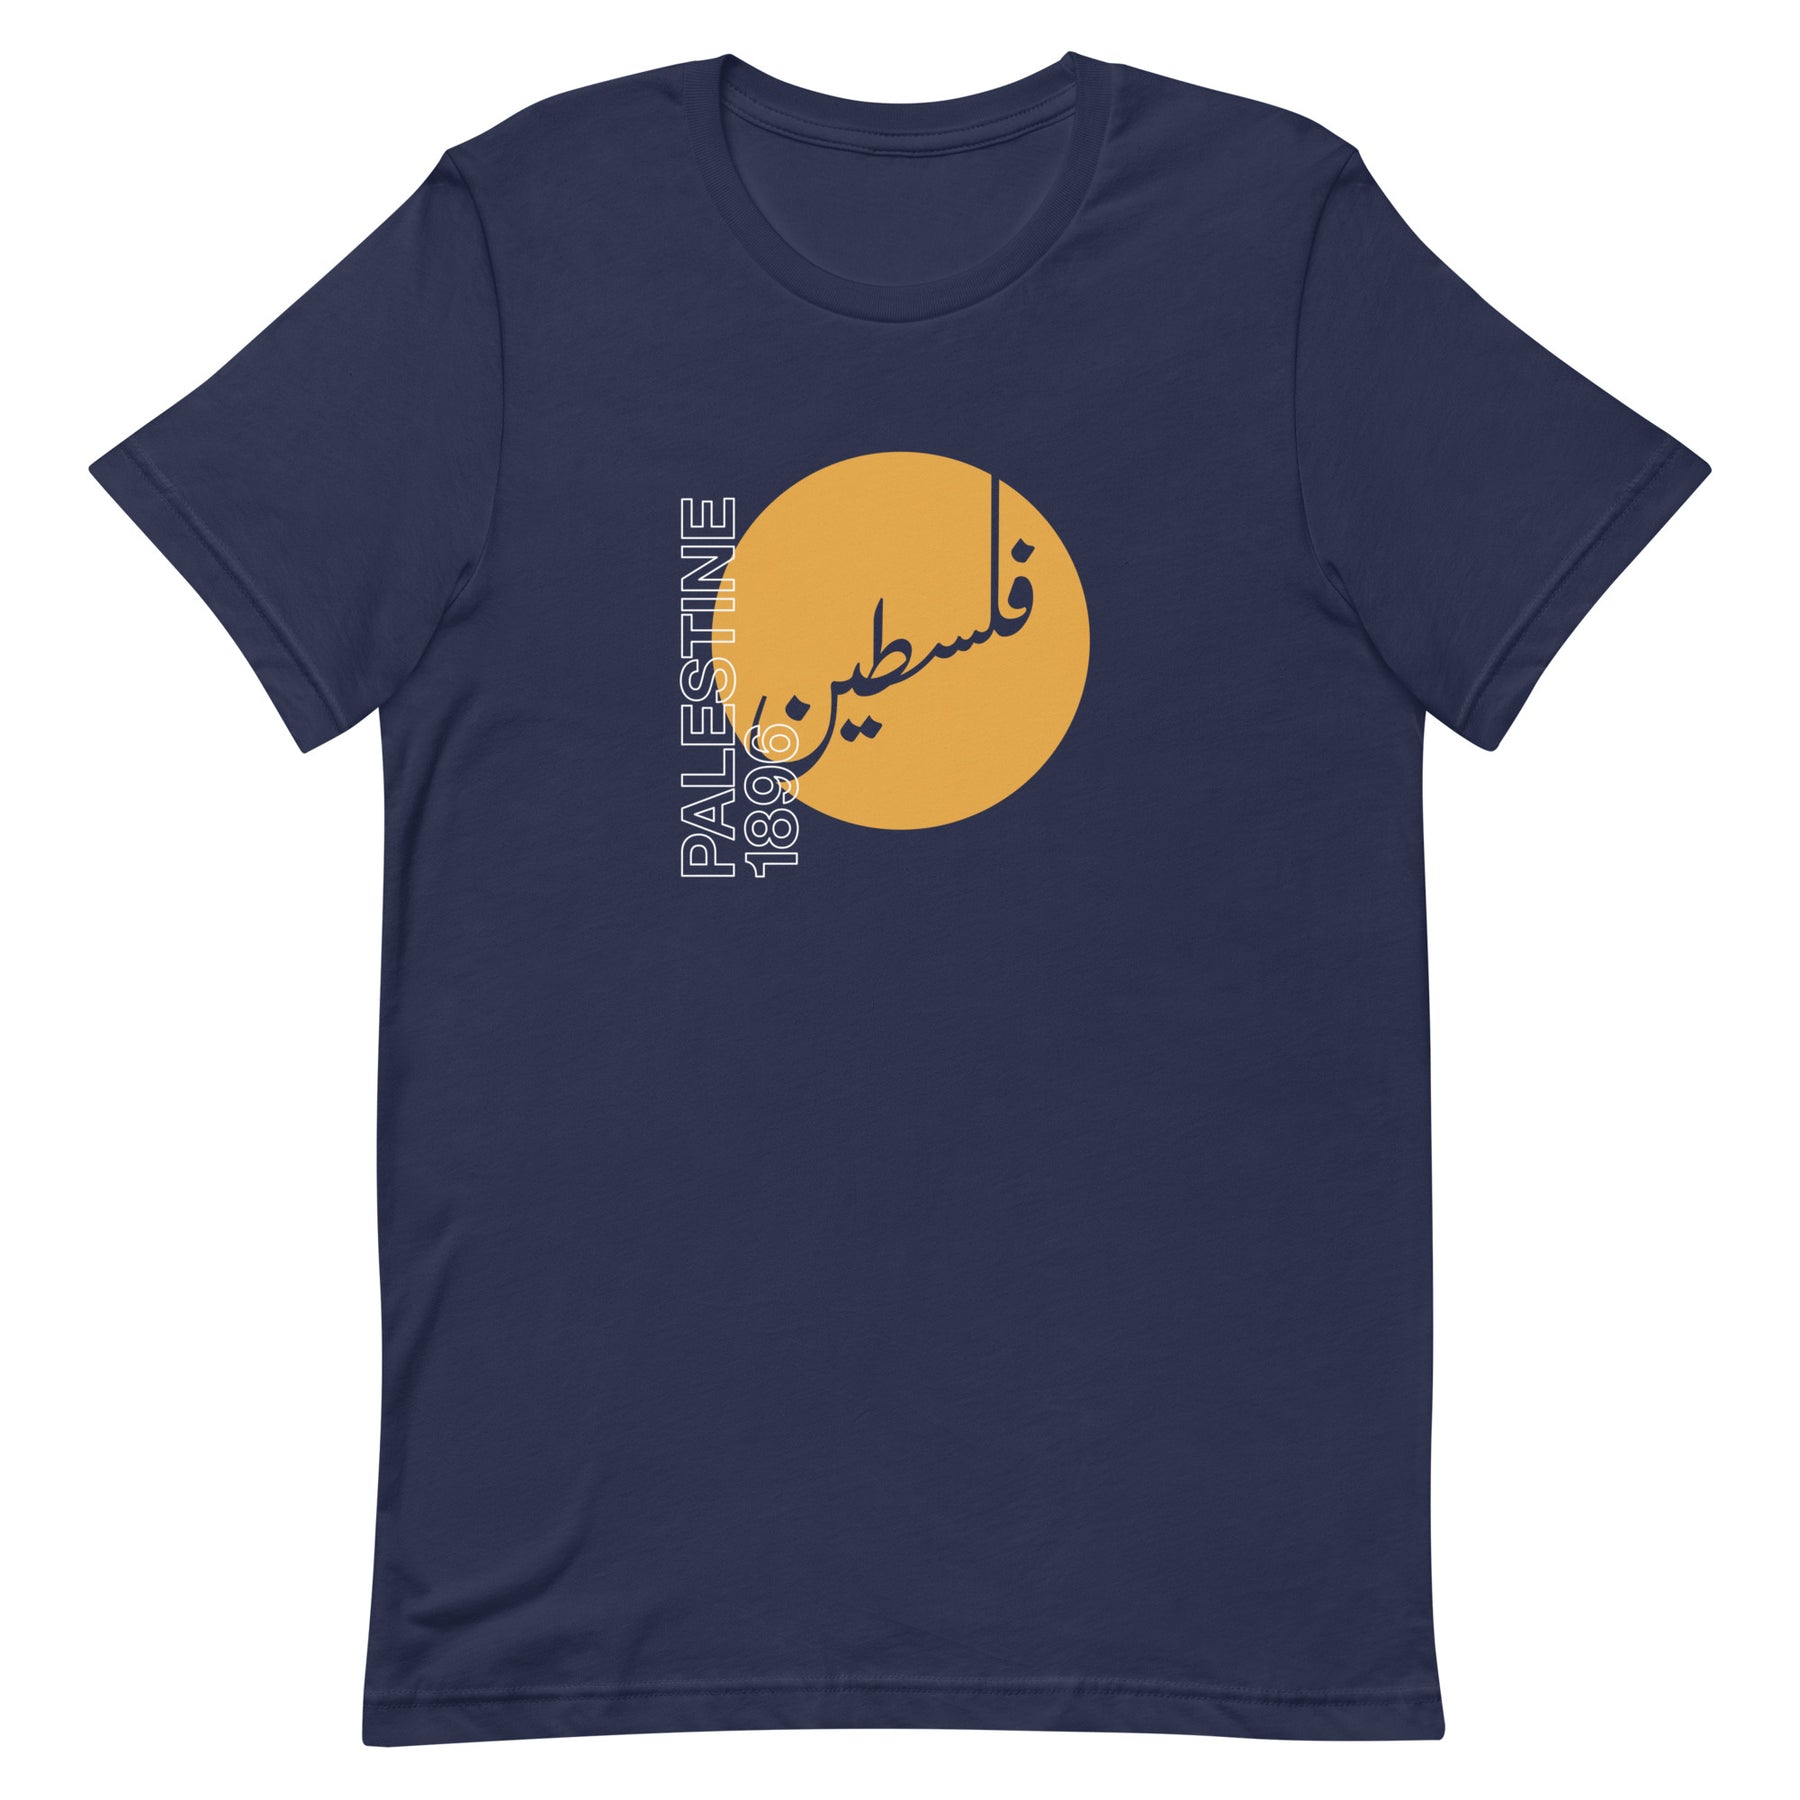 Palestine 1896 - T Shirt